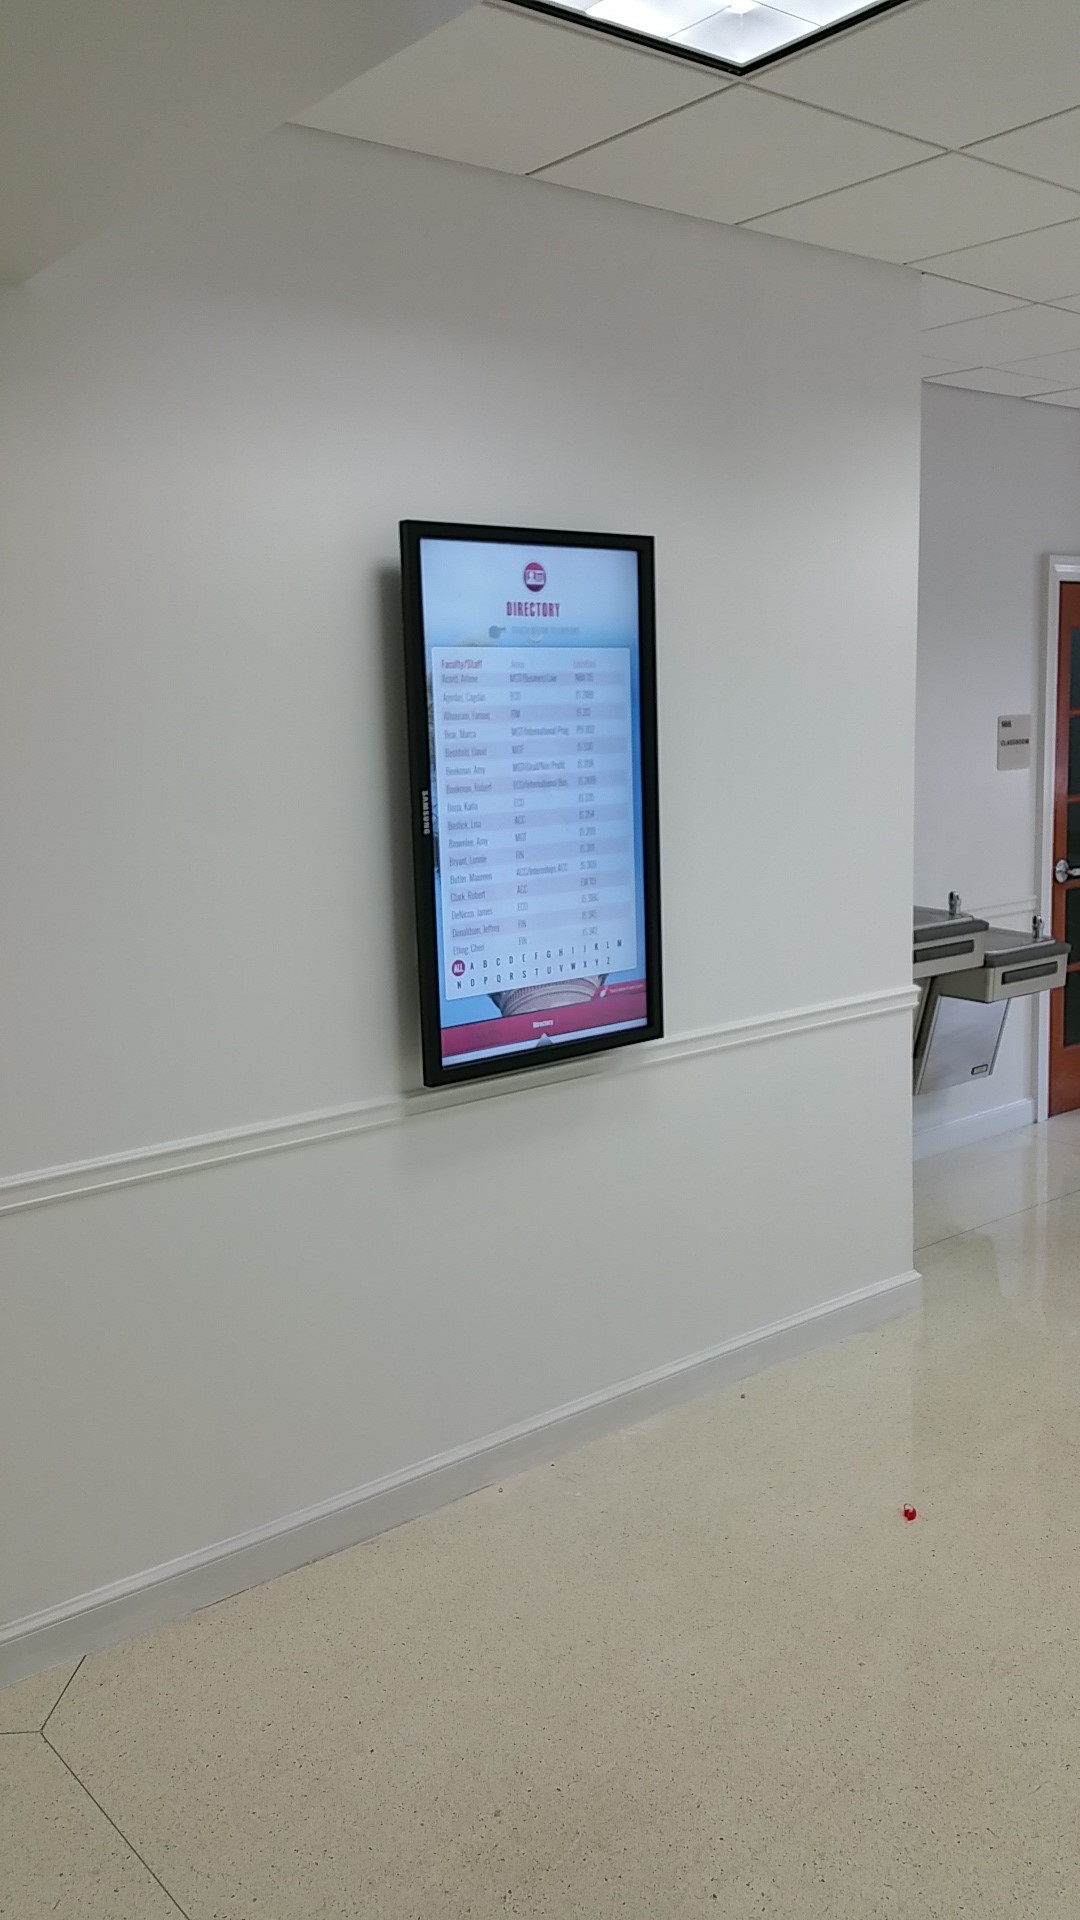 University of Tampa Display in Hallway